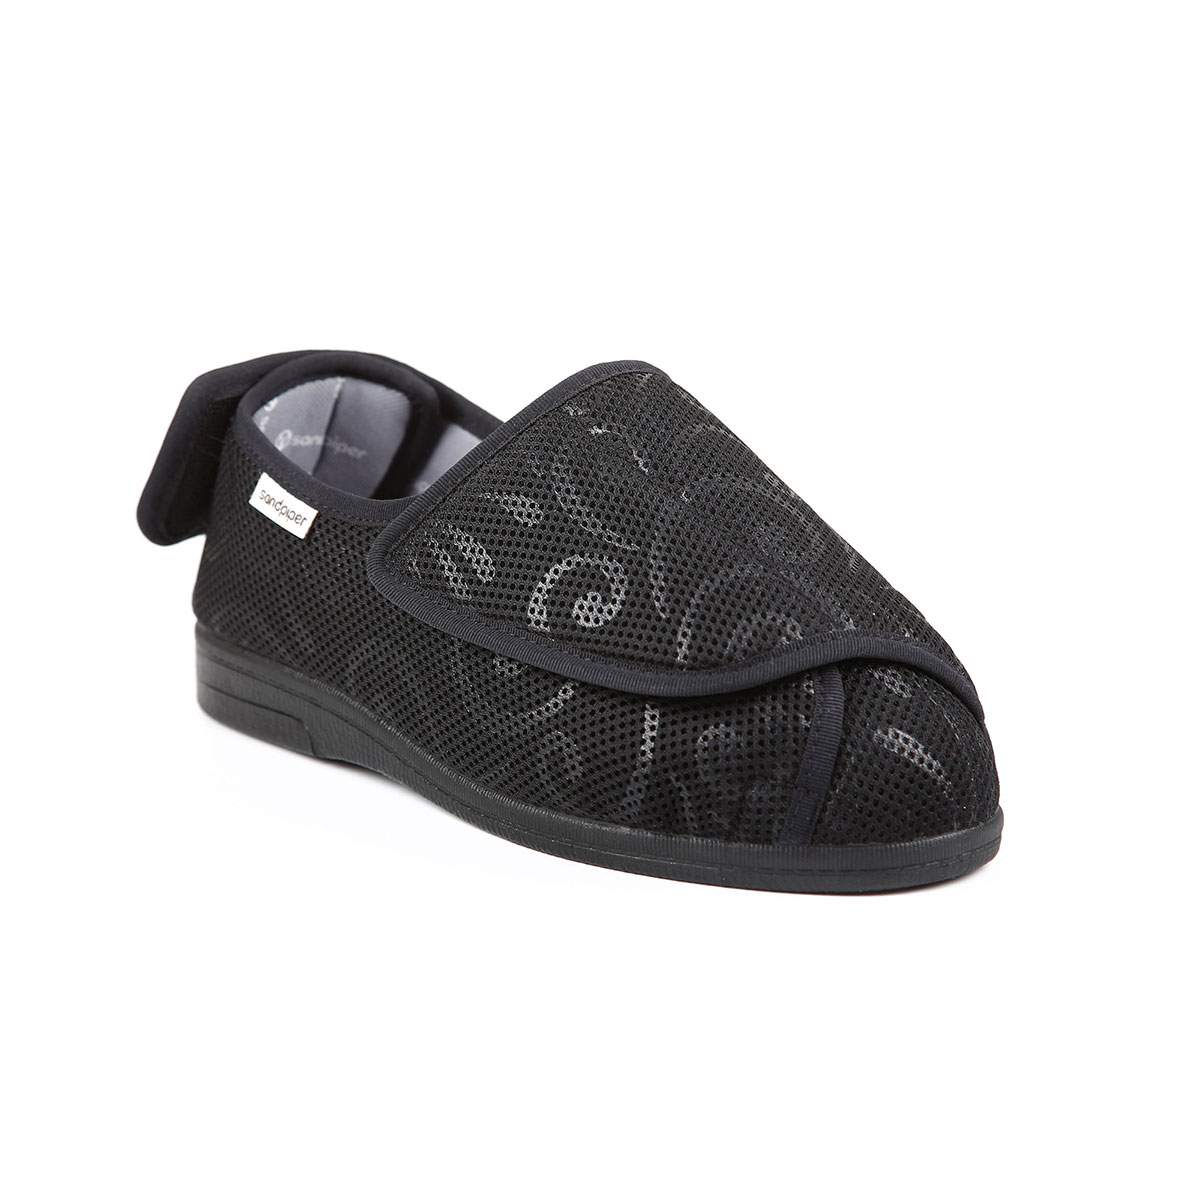 Black with swirl pattern wendy slipper